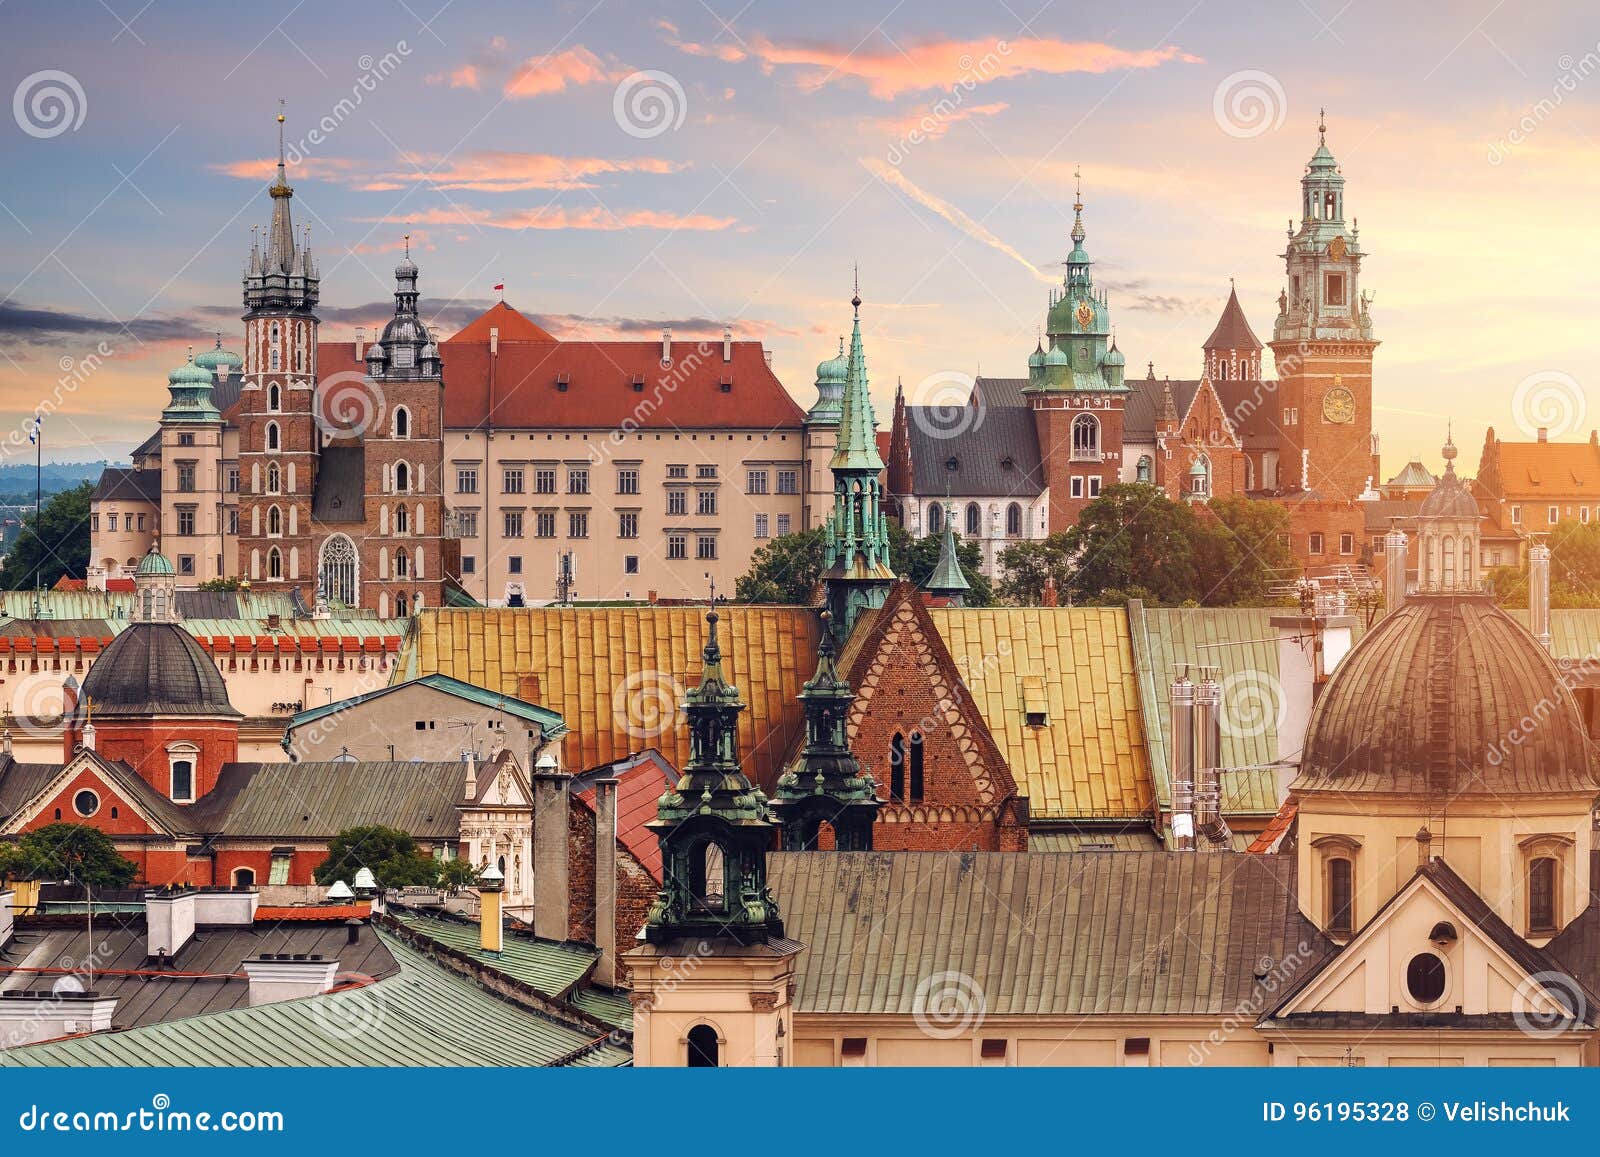 collage of krakow landmarks in the evening